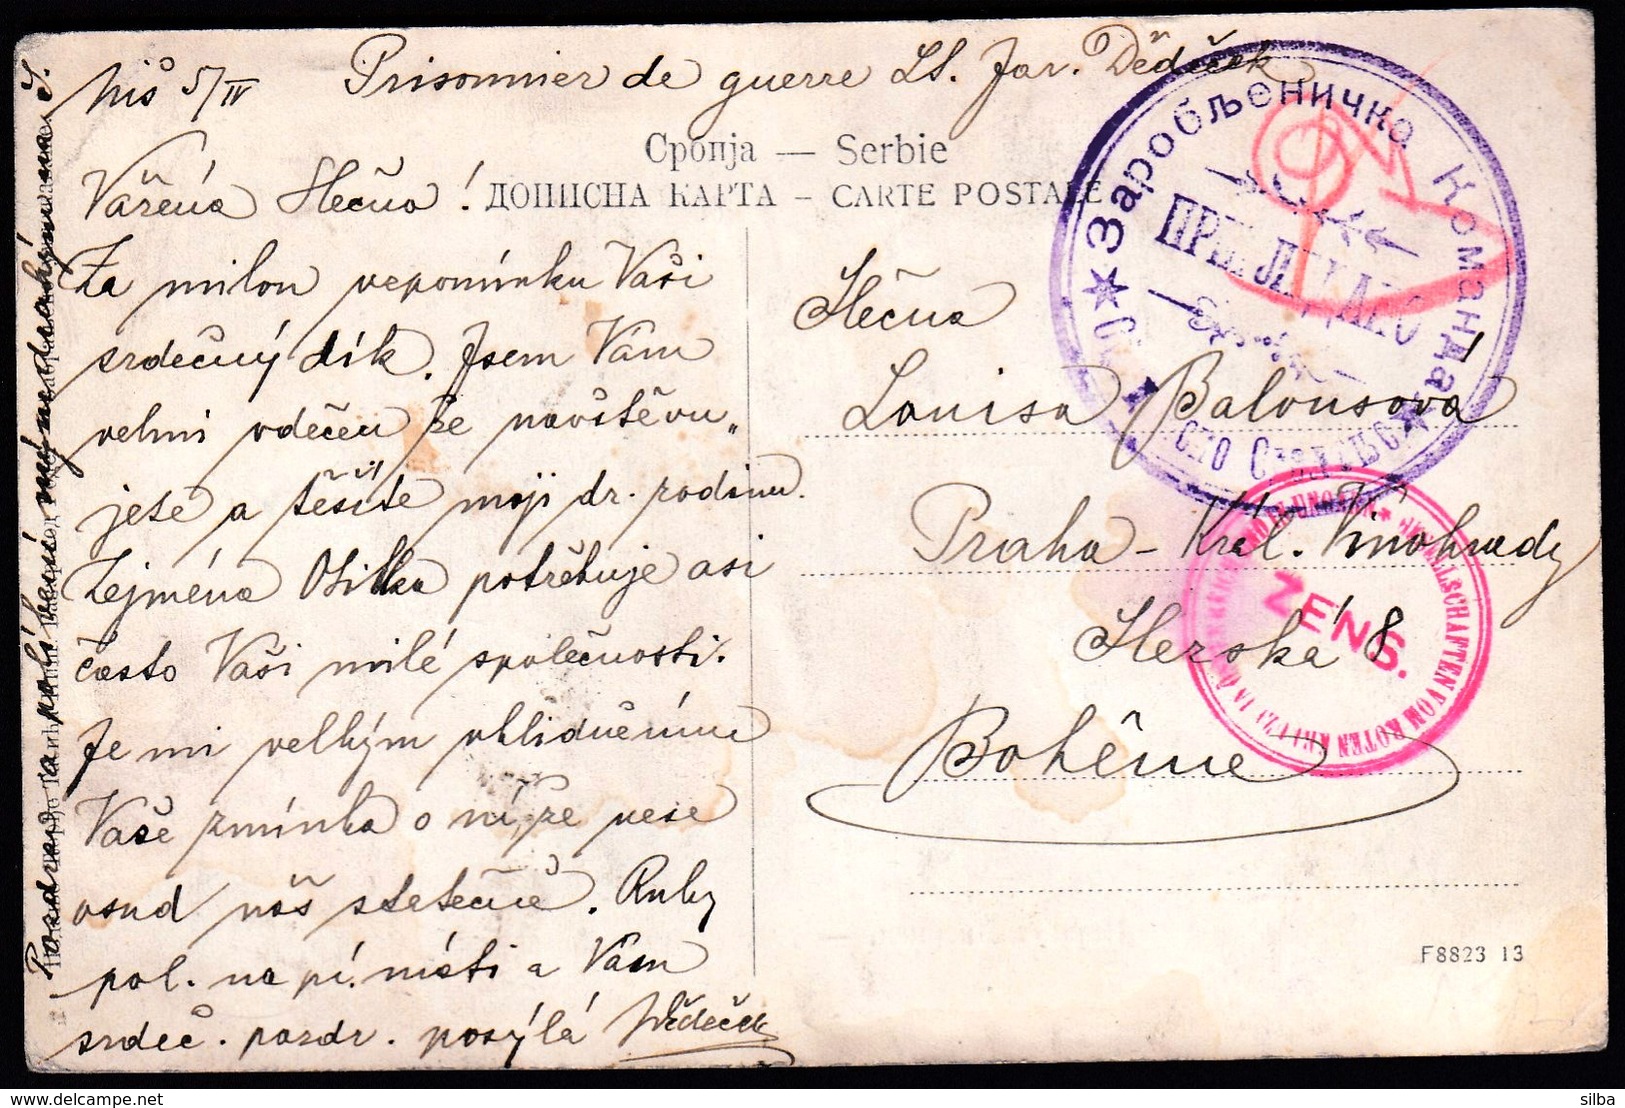 Serbia Nis / WWI1CENSORSHIP - ZENSUR  / Zensur Red Cross / Prisoner Of War. POW Mail - Serbia